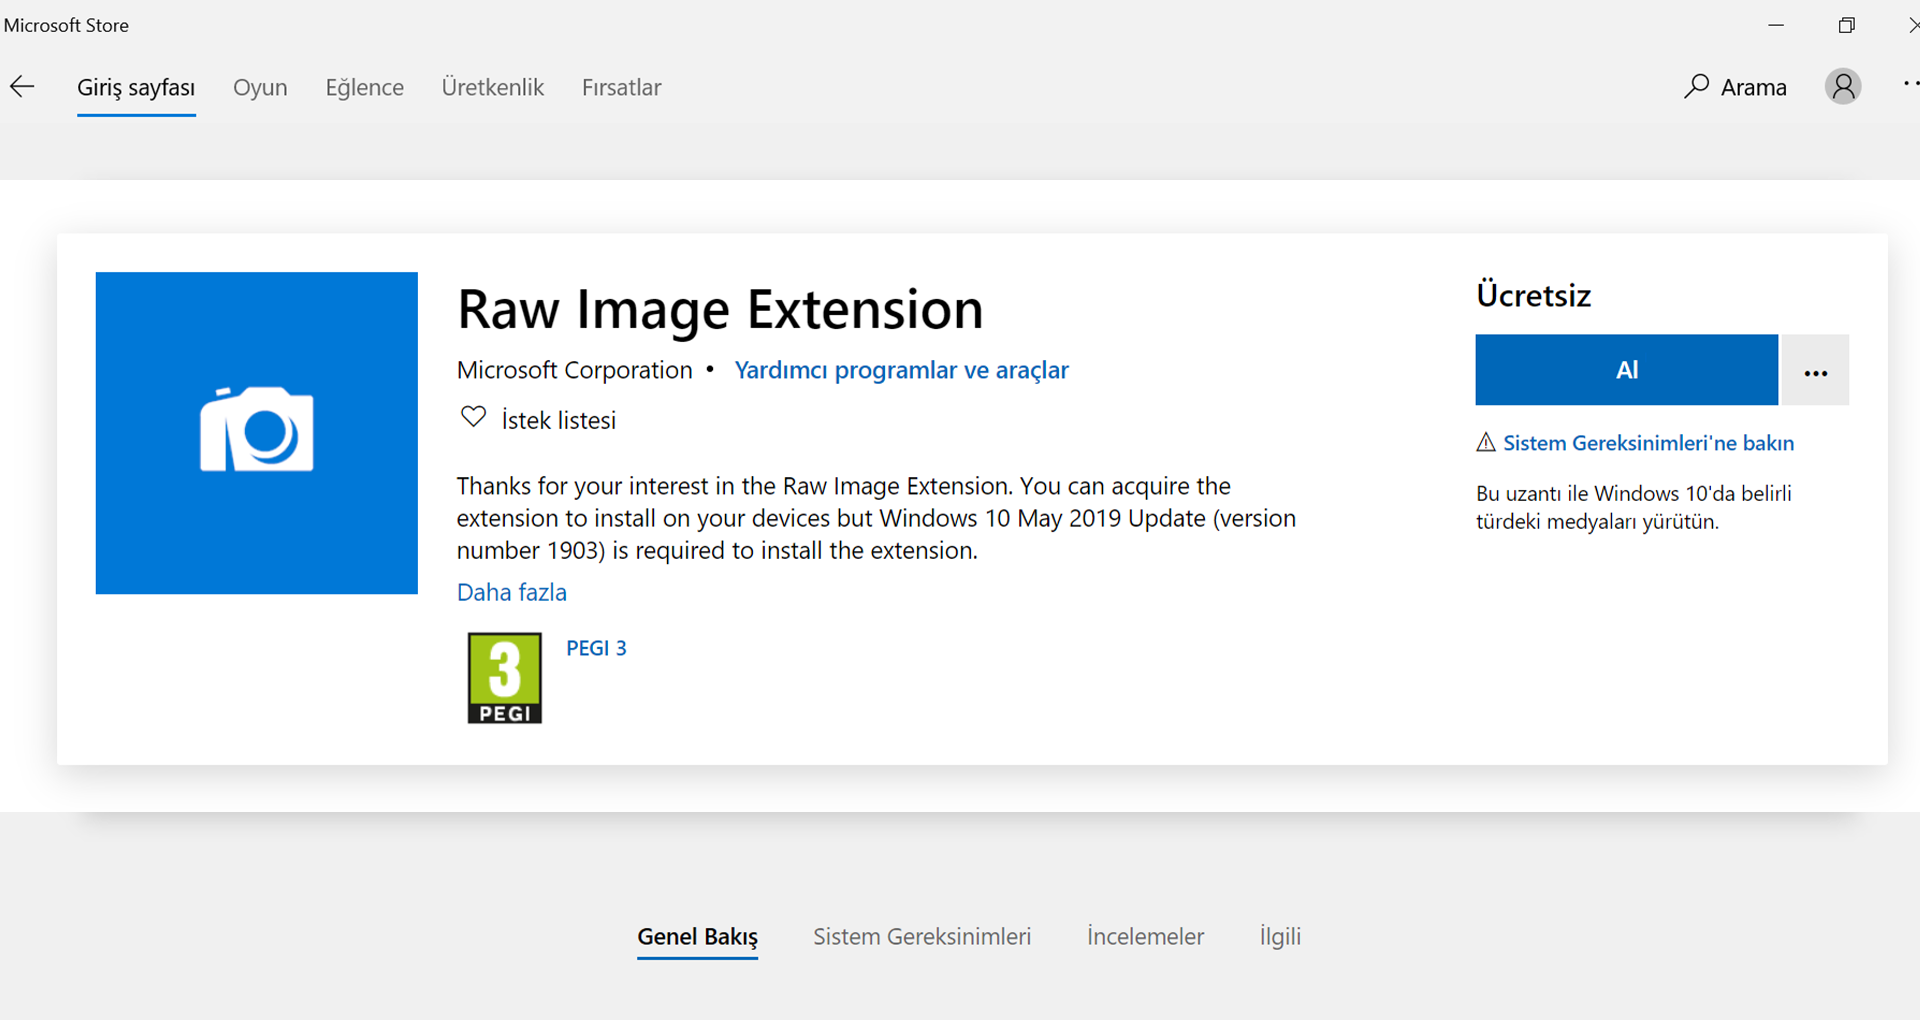 Microsoft Stor'dan Raw Images Extension'ı Ücretsiz Al Sayfası